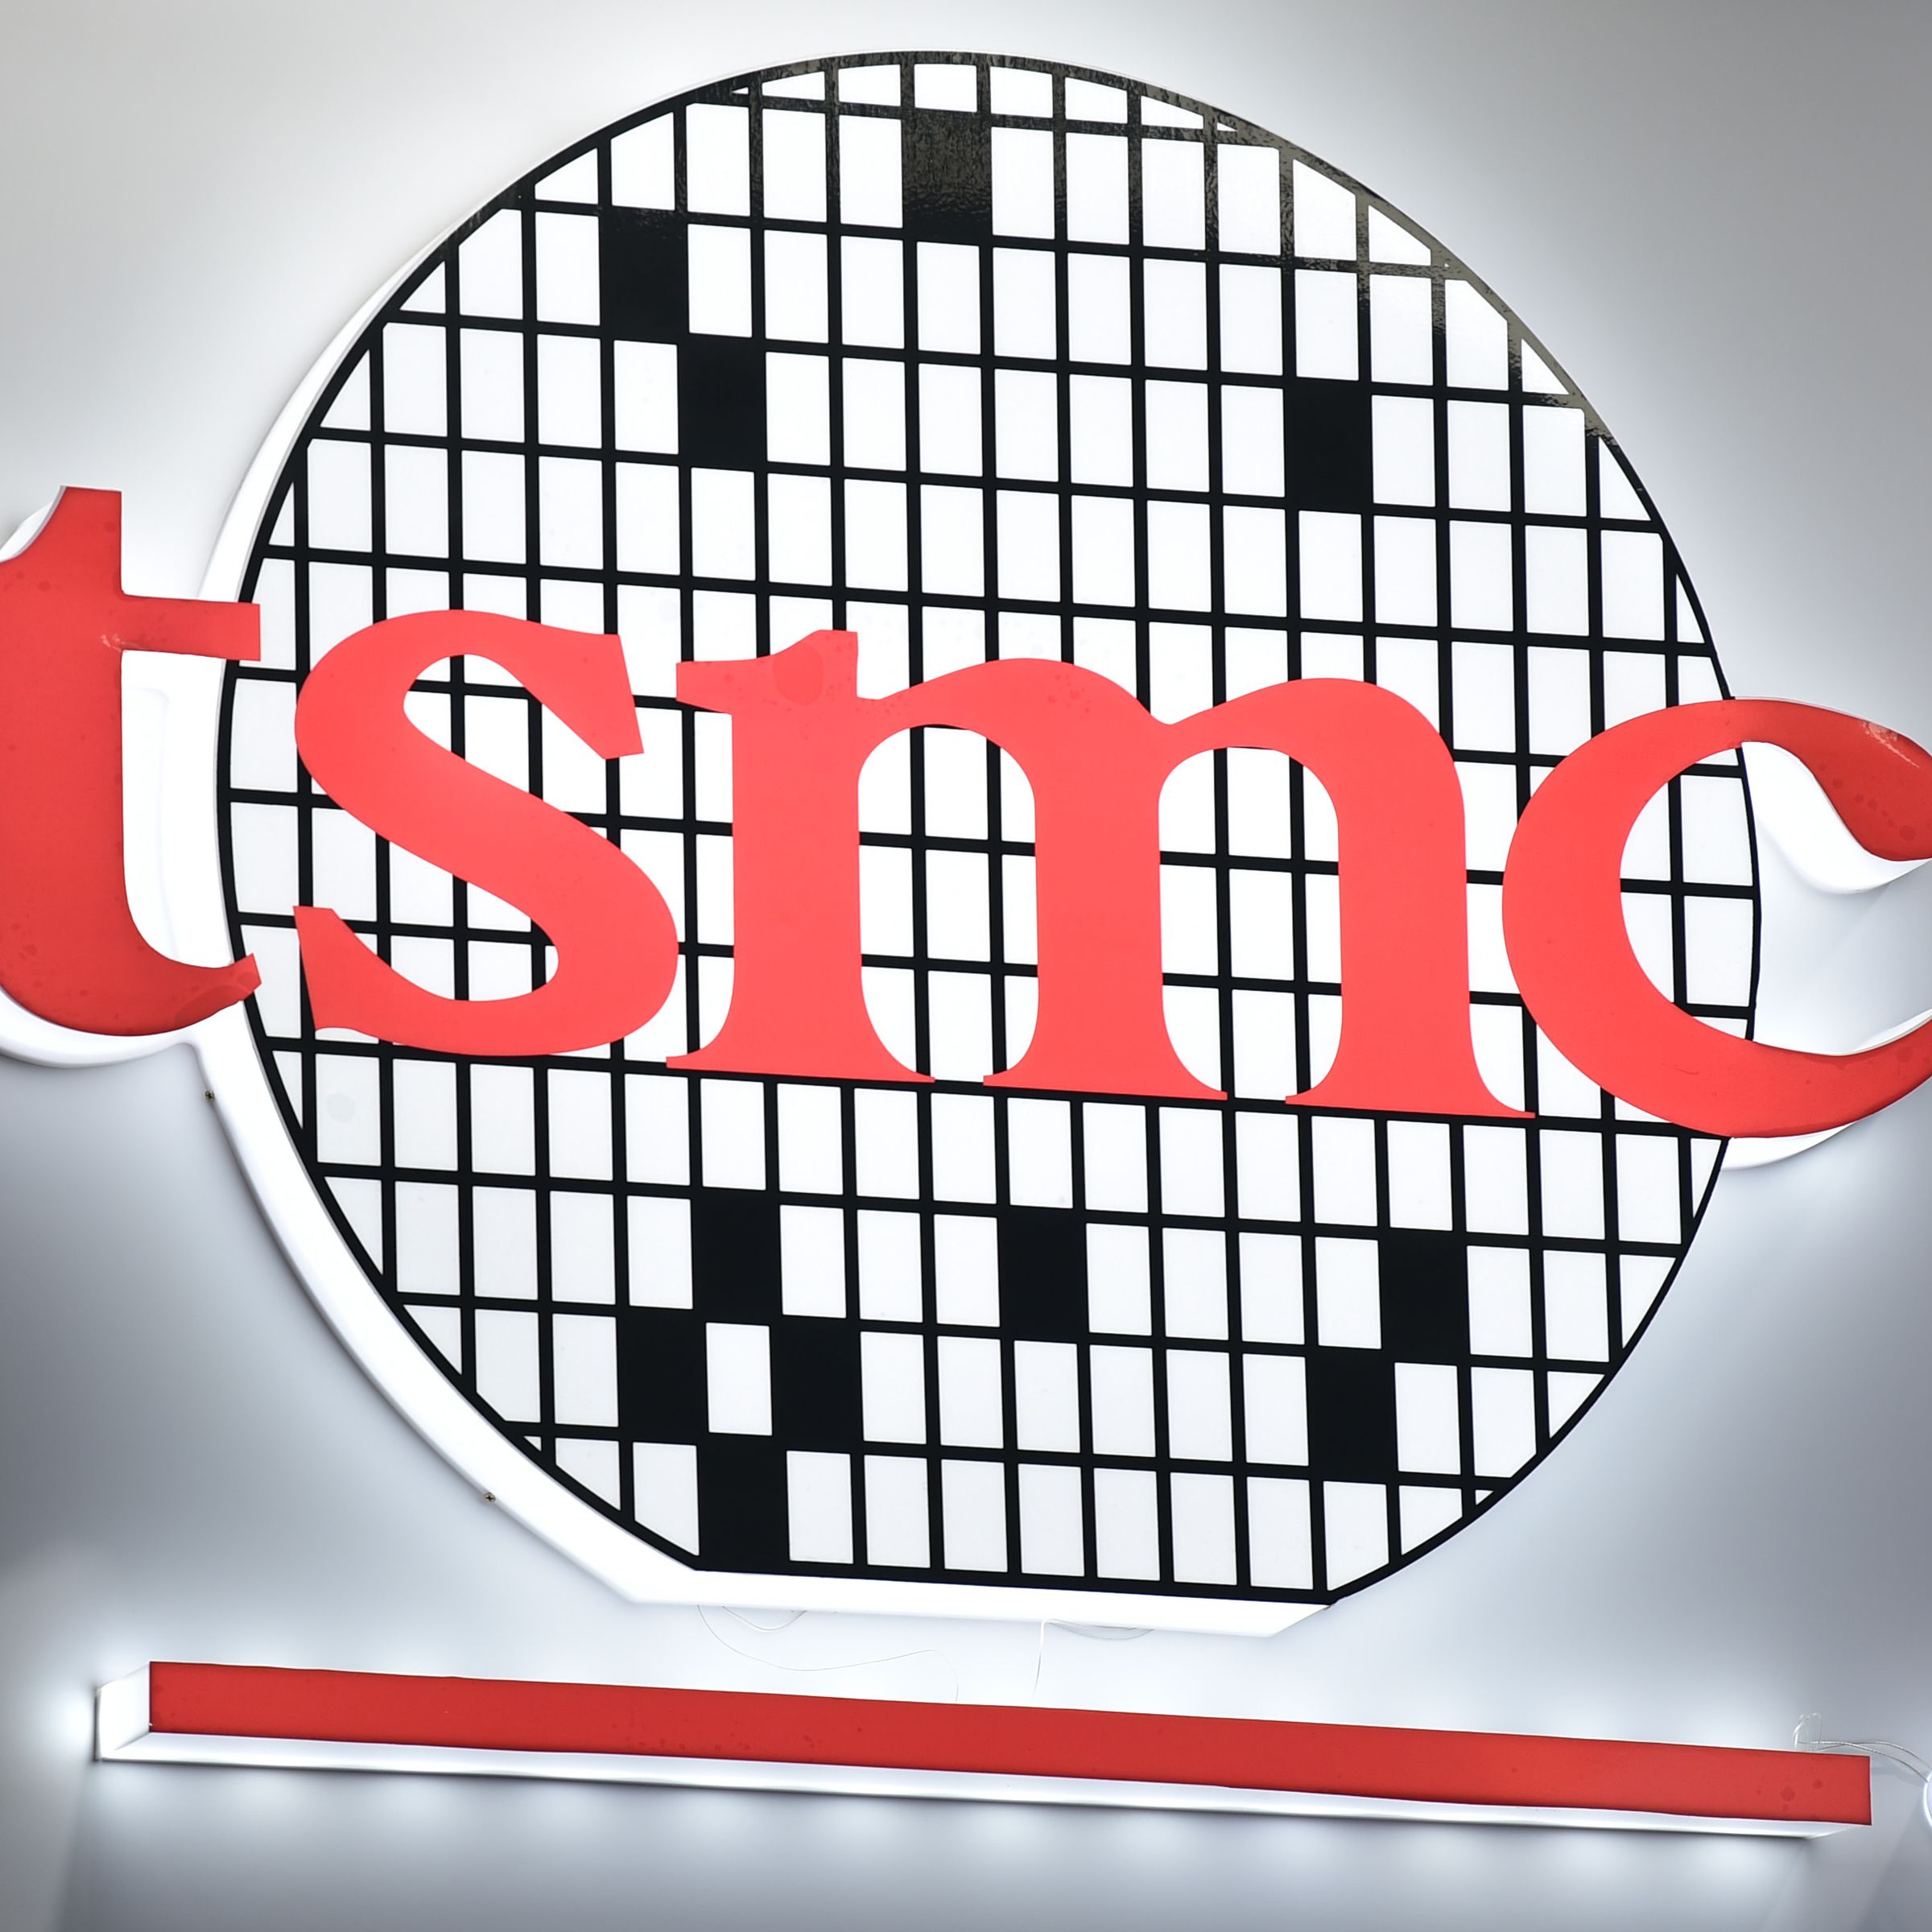 A logo of Taiwan Semiconductor Manufacturing Company (TSMC)